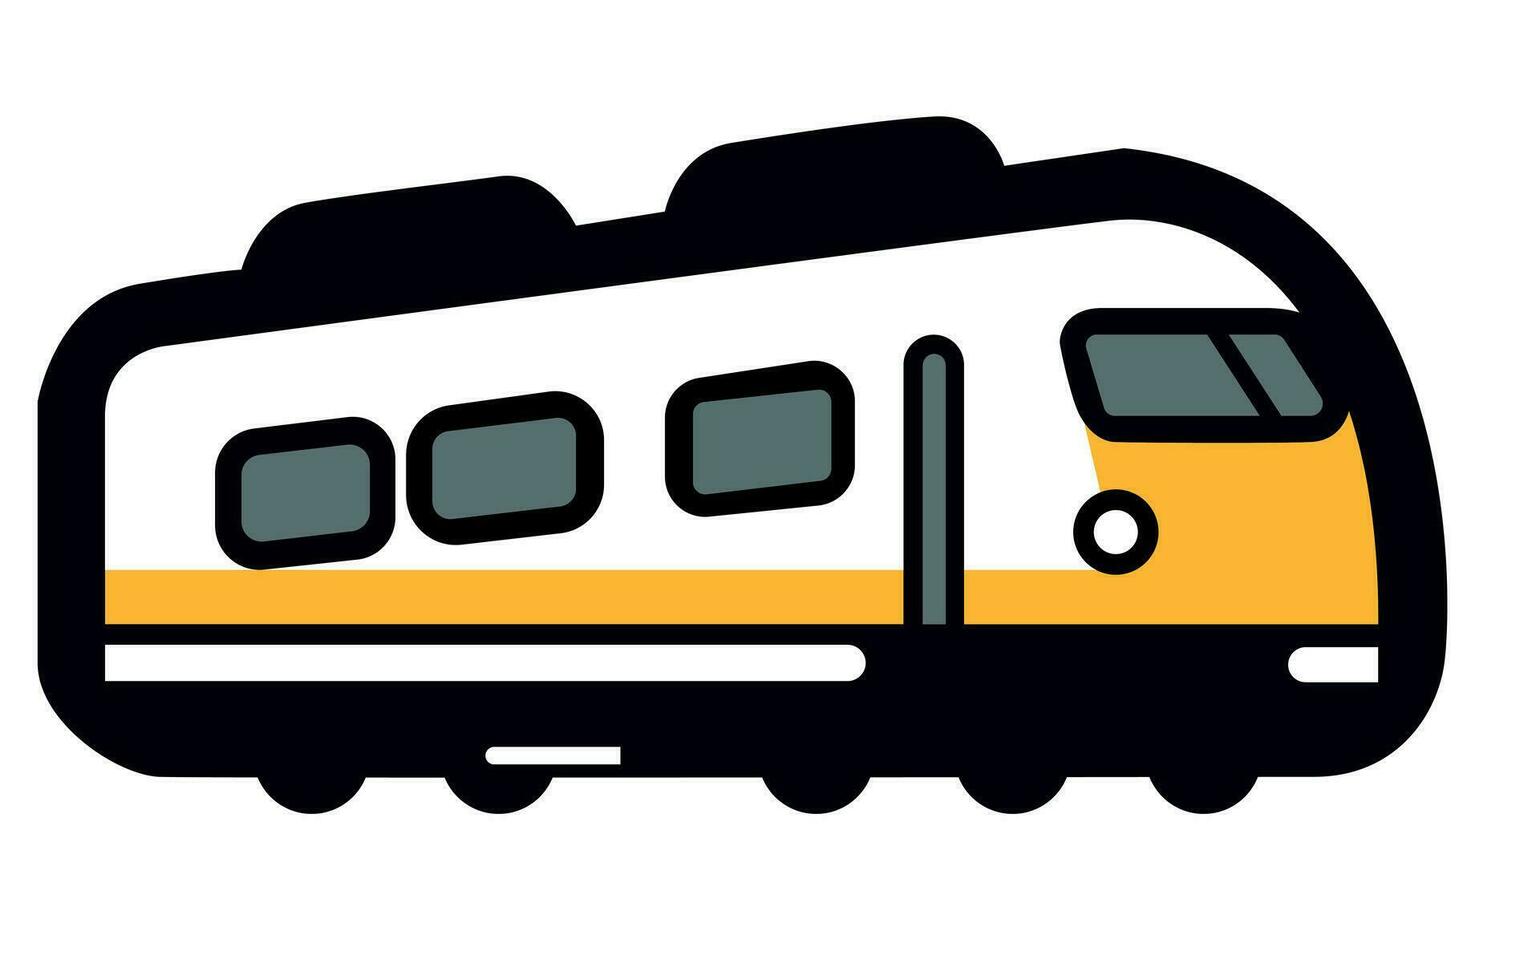 voertuig trein illustratie. voertuig trein vector illustratie